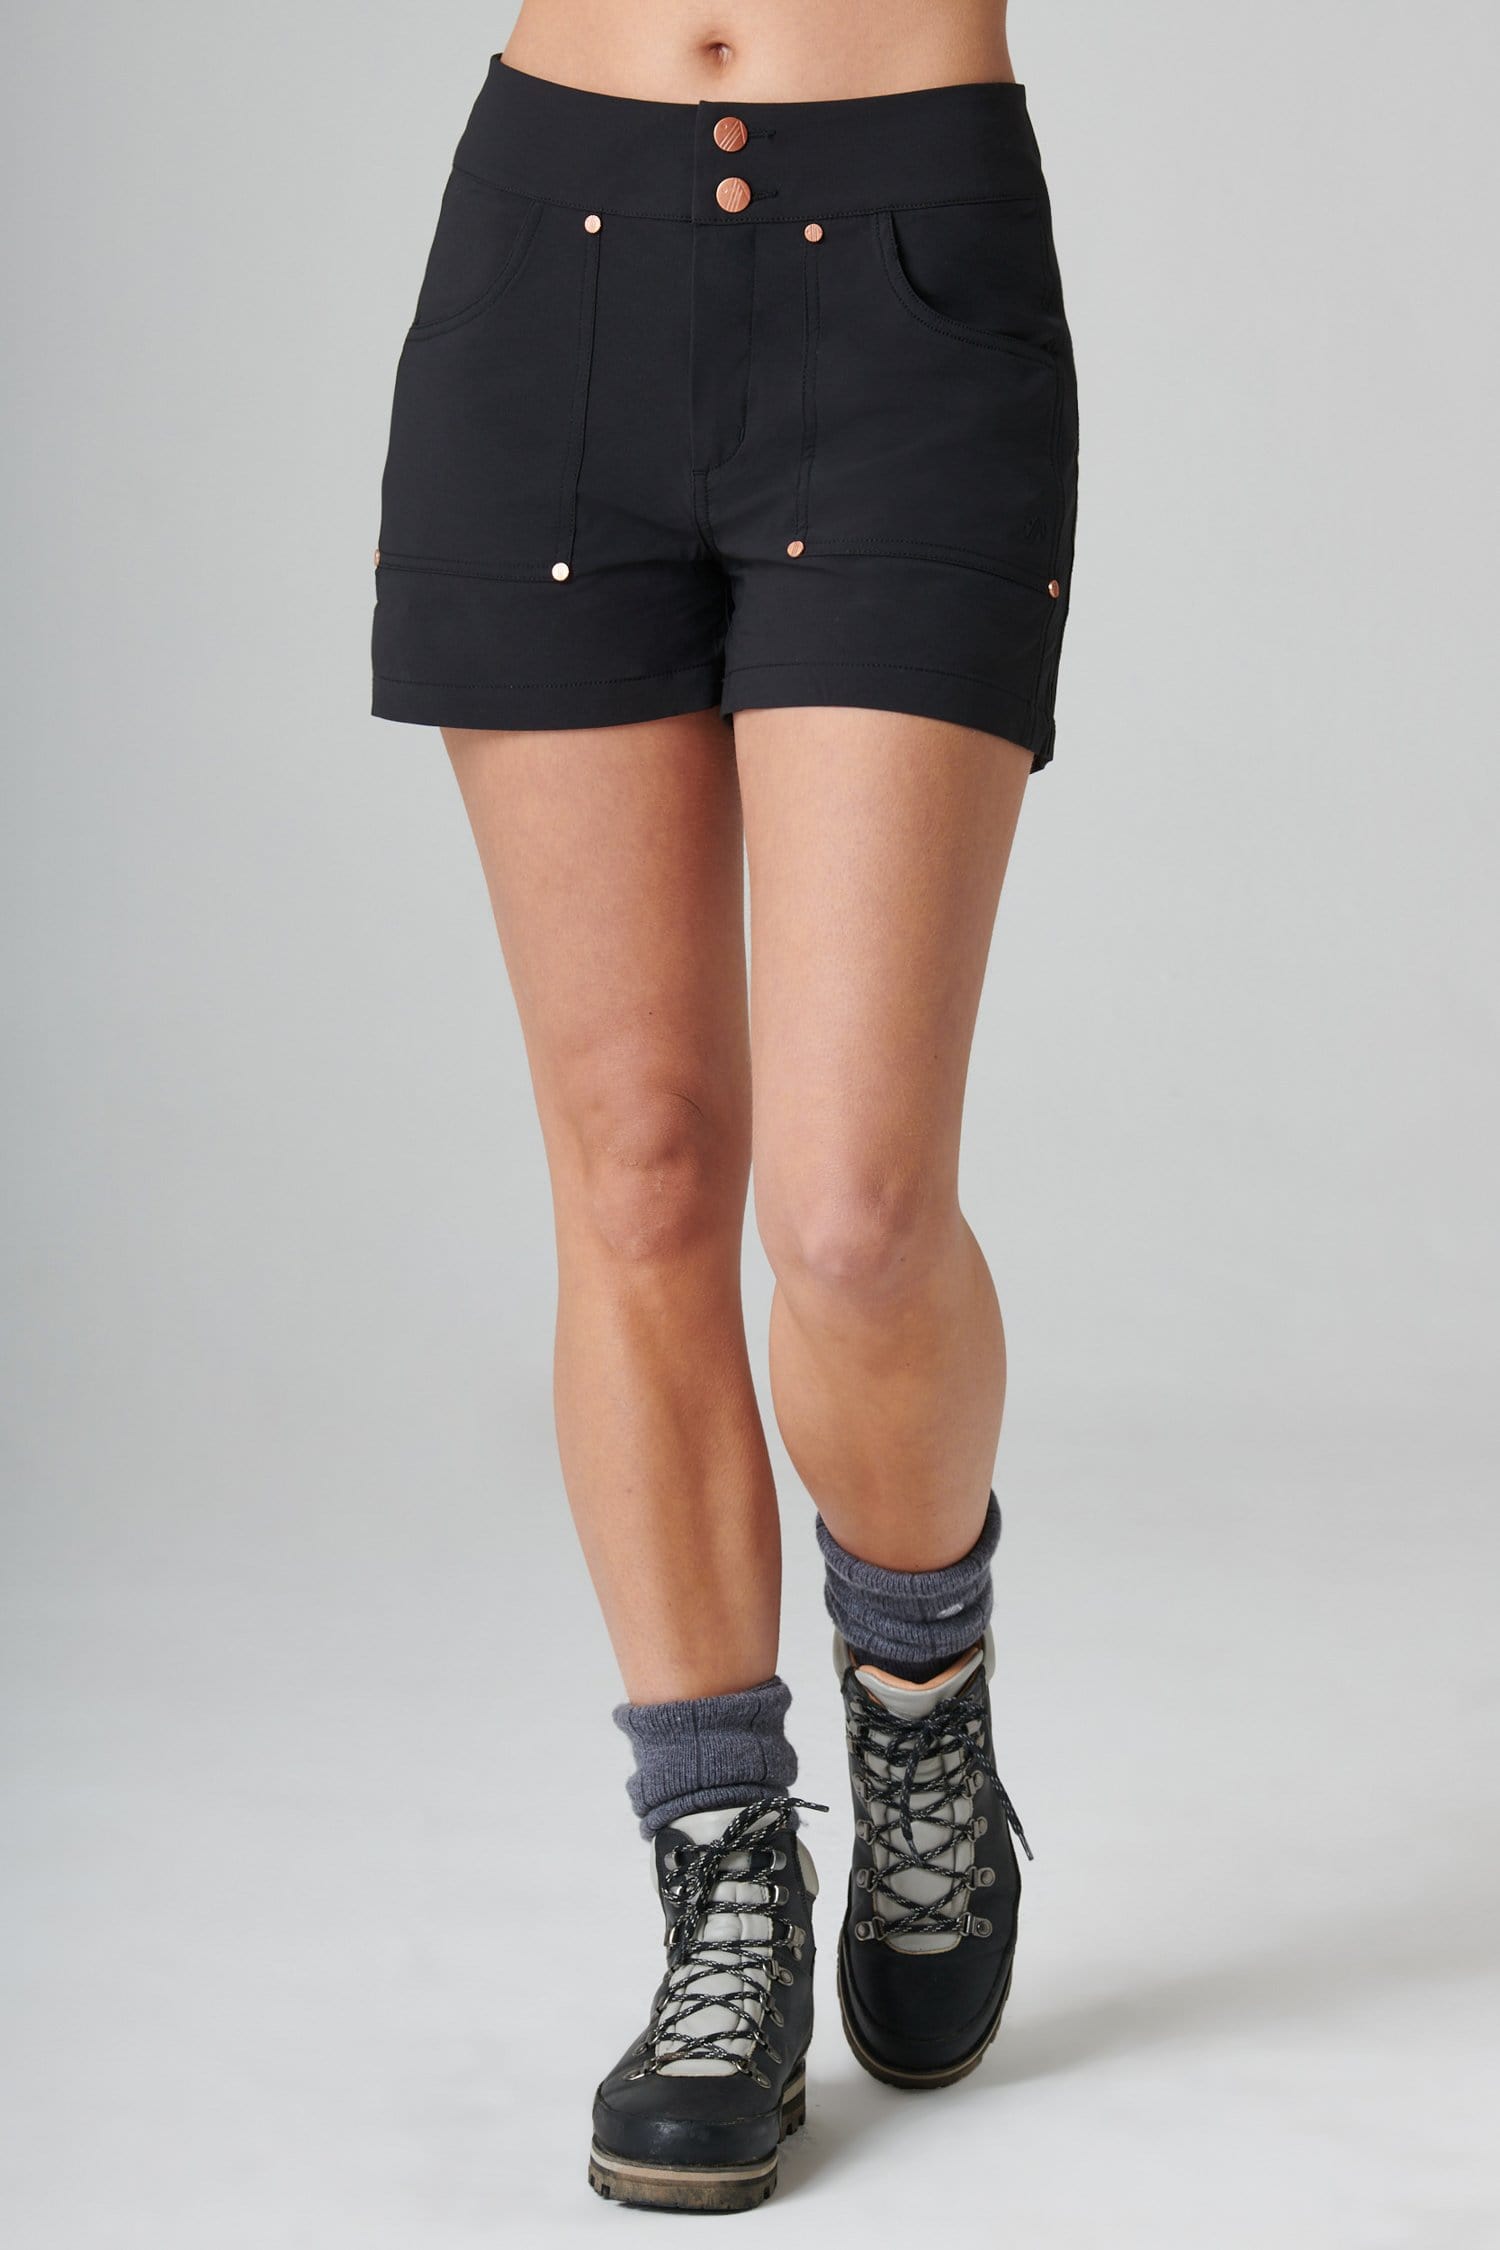 Trek Shorts - Black - 30 / Uk12 - Womens - Acai Outdoorwear